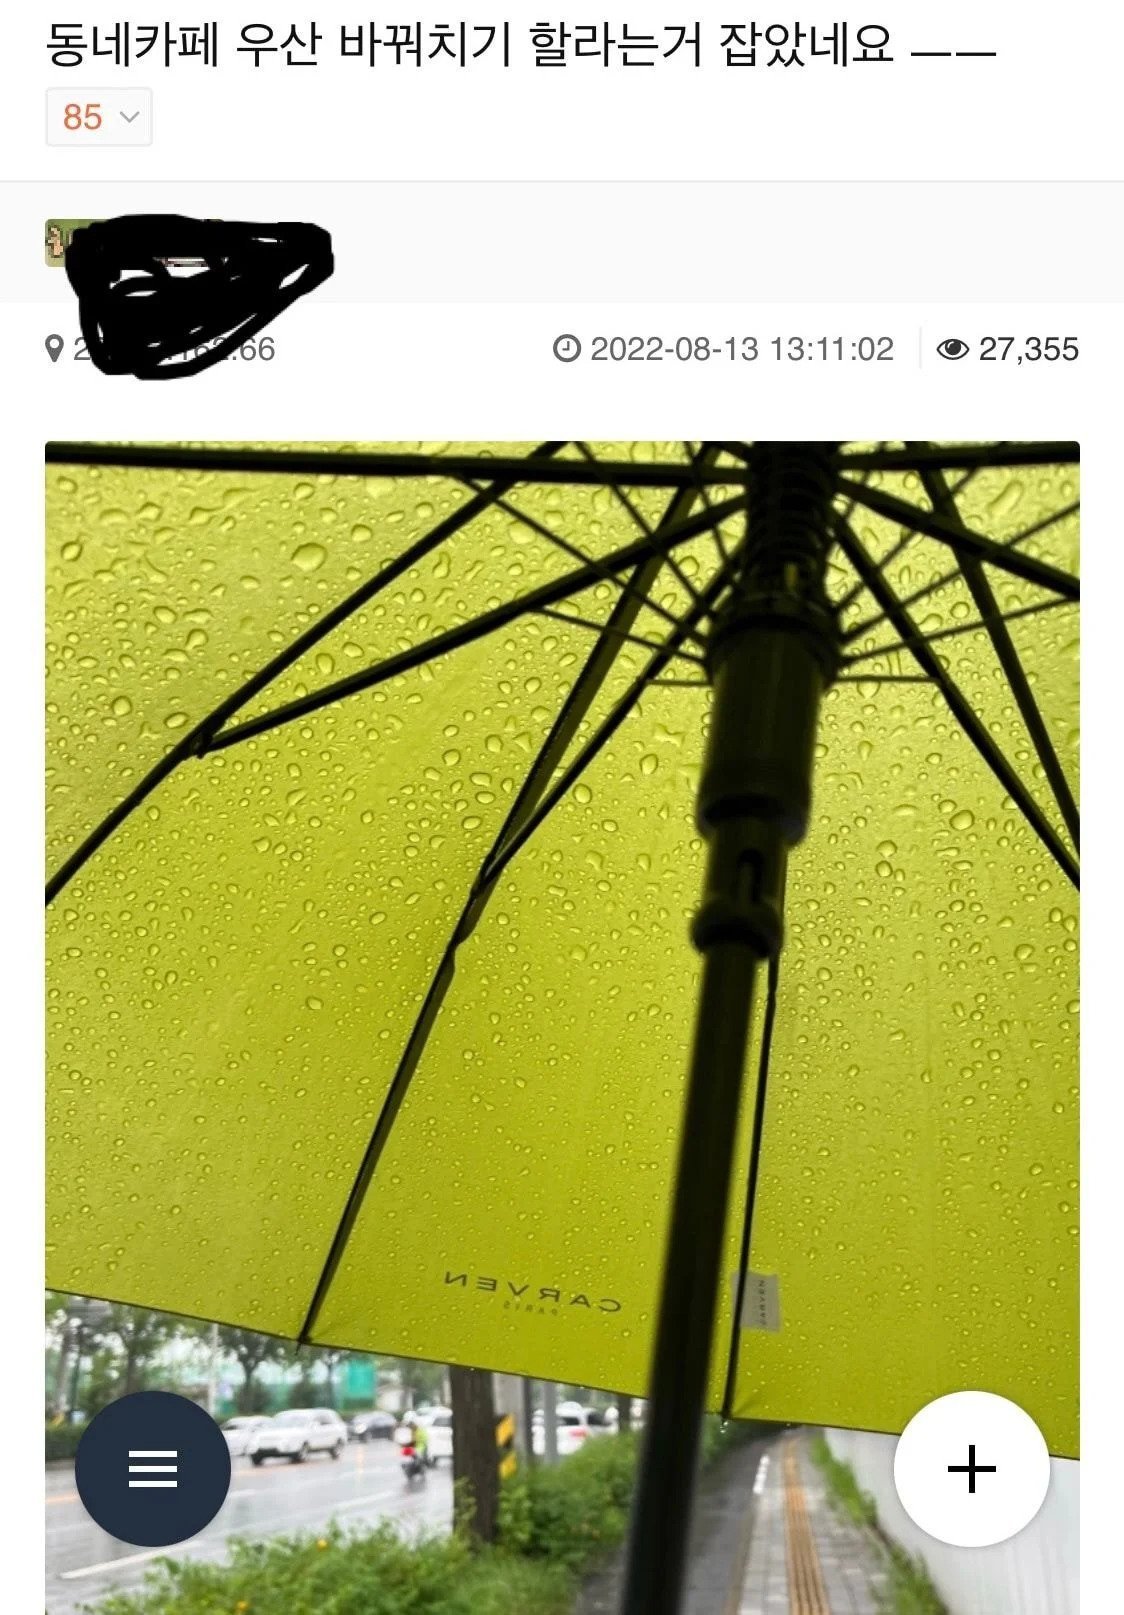 jismTz.webp.ren.jpg 매장 공용 우산통에 우산을 꽂기 꺼려지는 이유.jpg